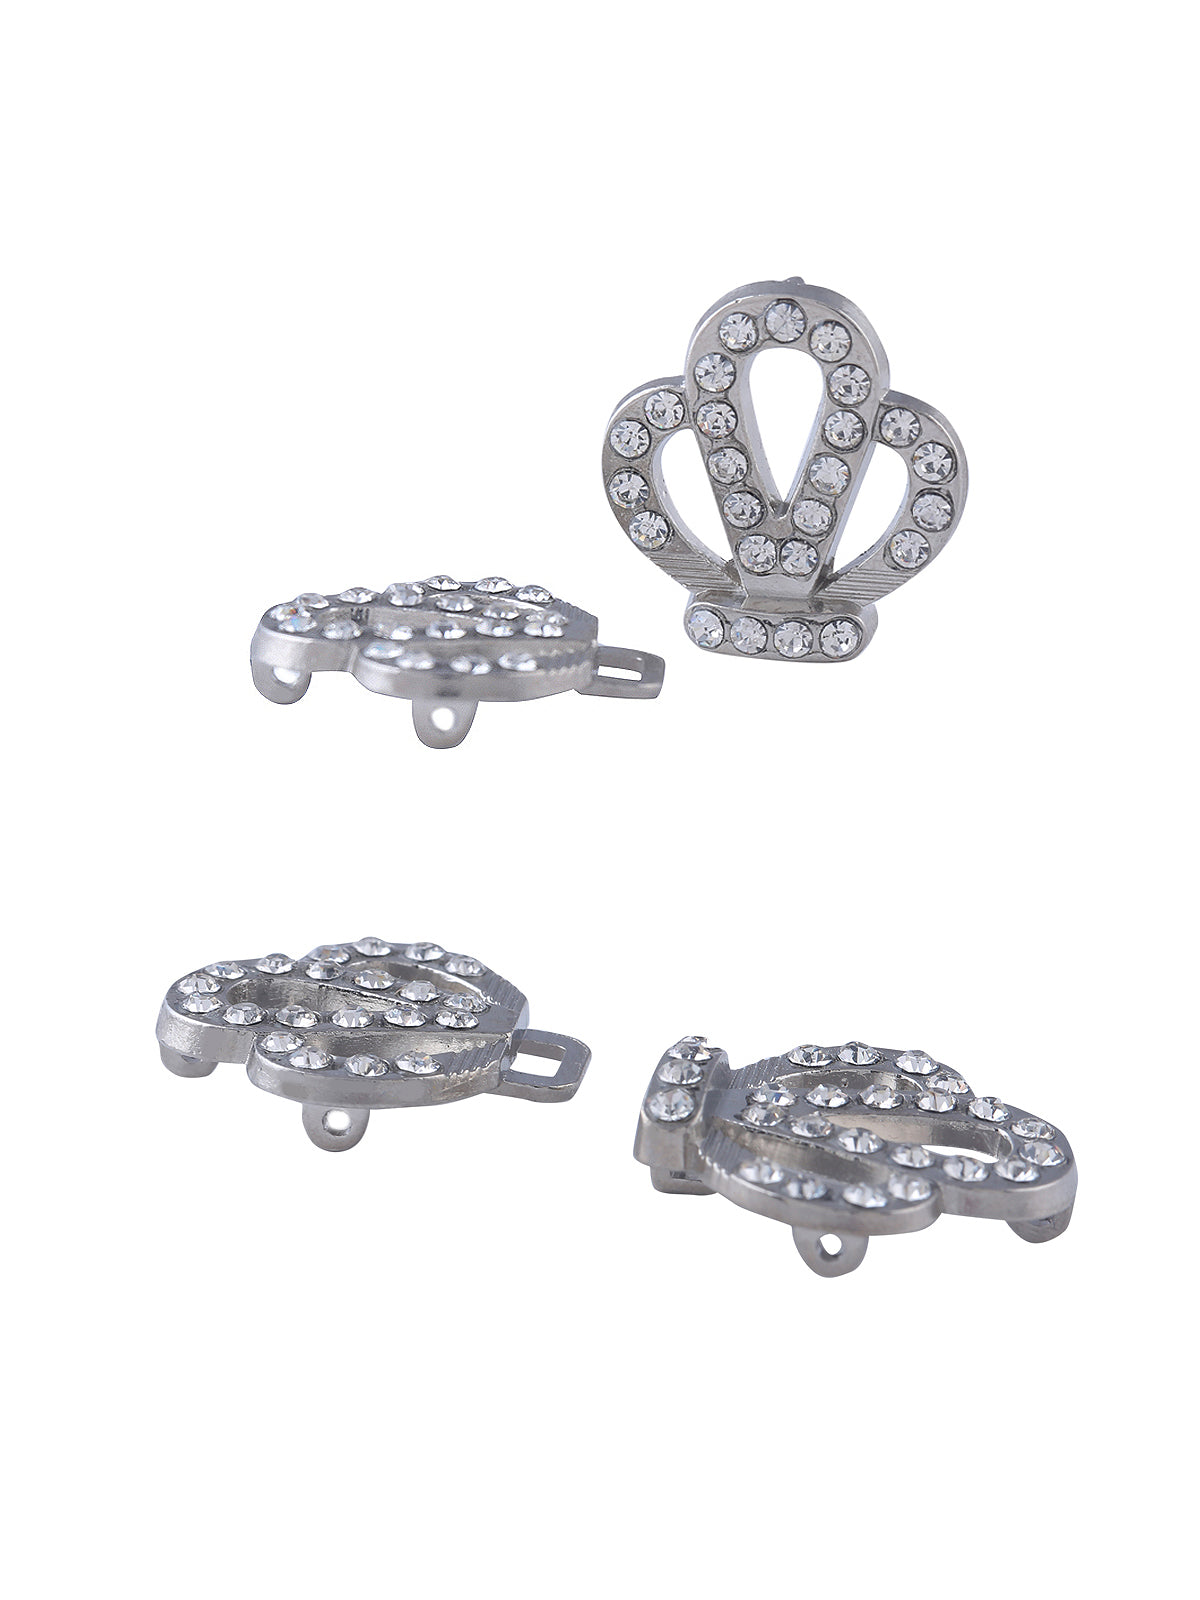 Shiny Silver Crown Shape 2 Part Closure Clasp Buckle - Jhonea Accessories